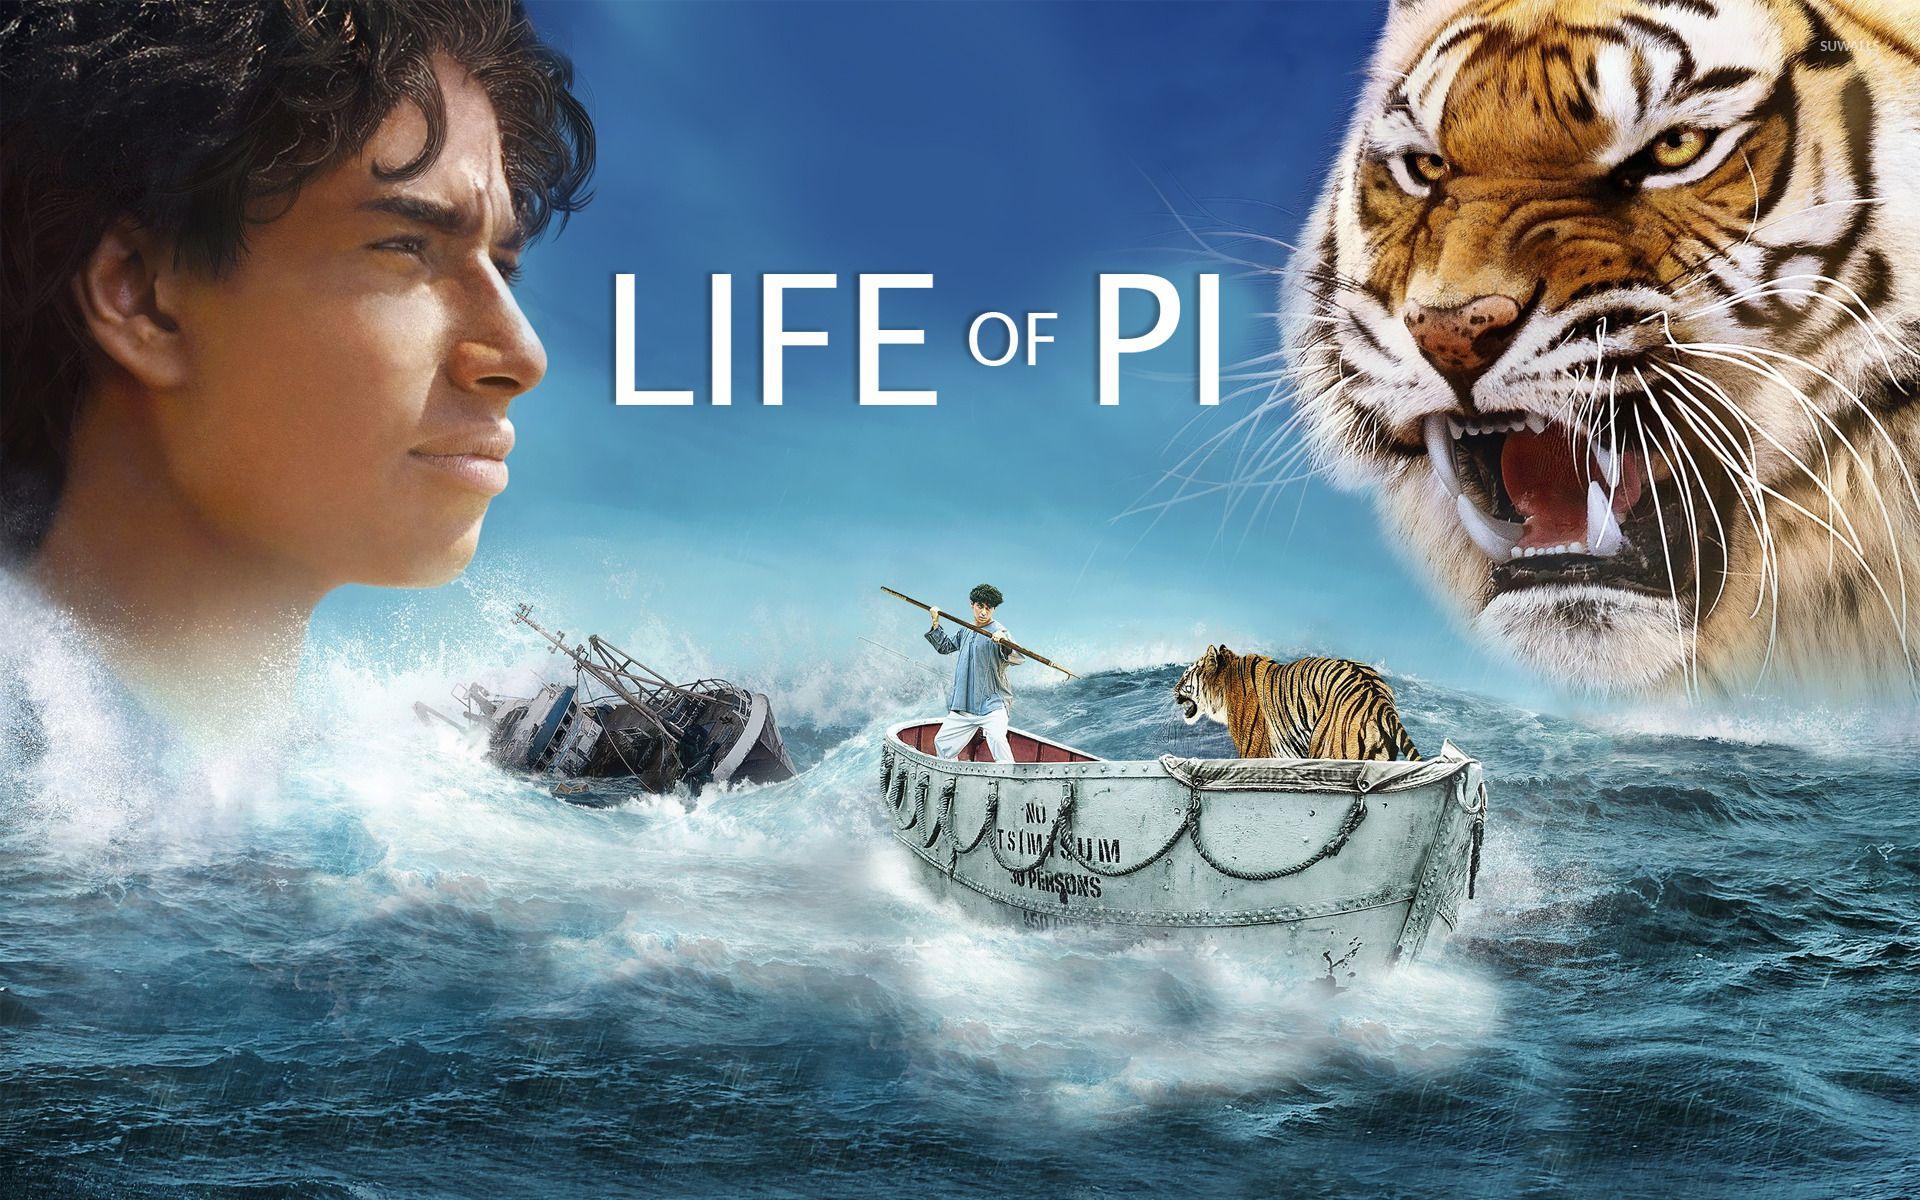 the life of pi full movie free